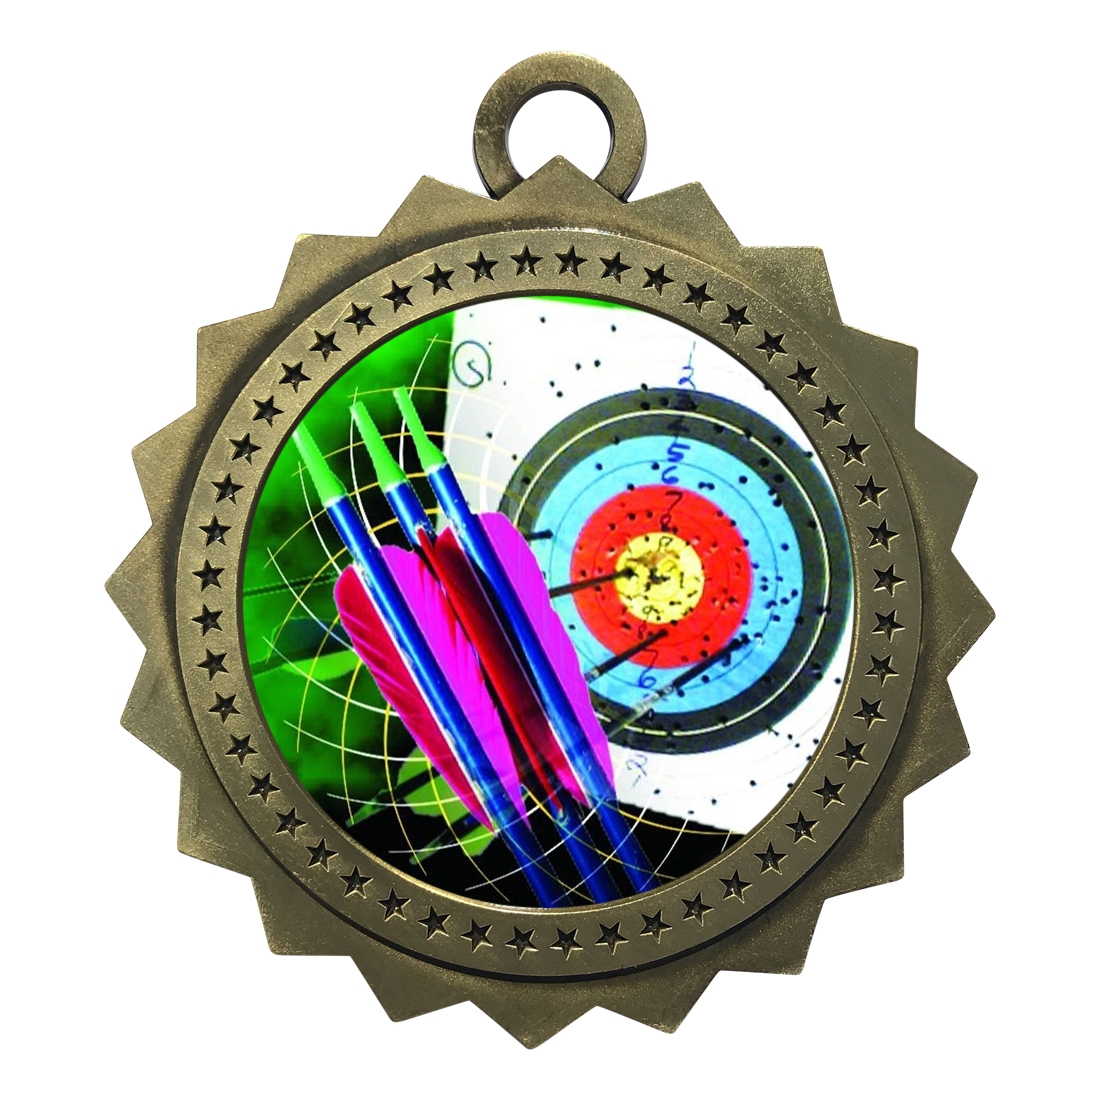 3" Archery Medal